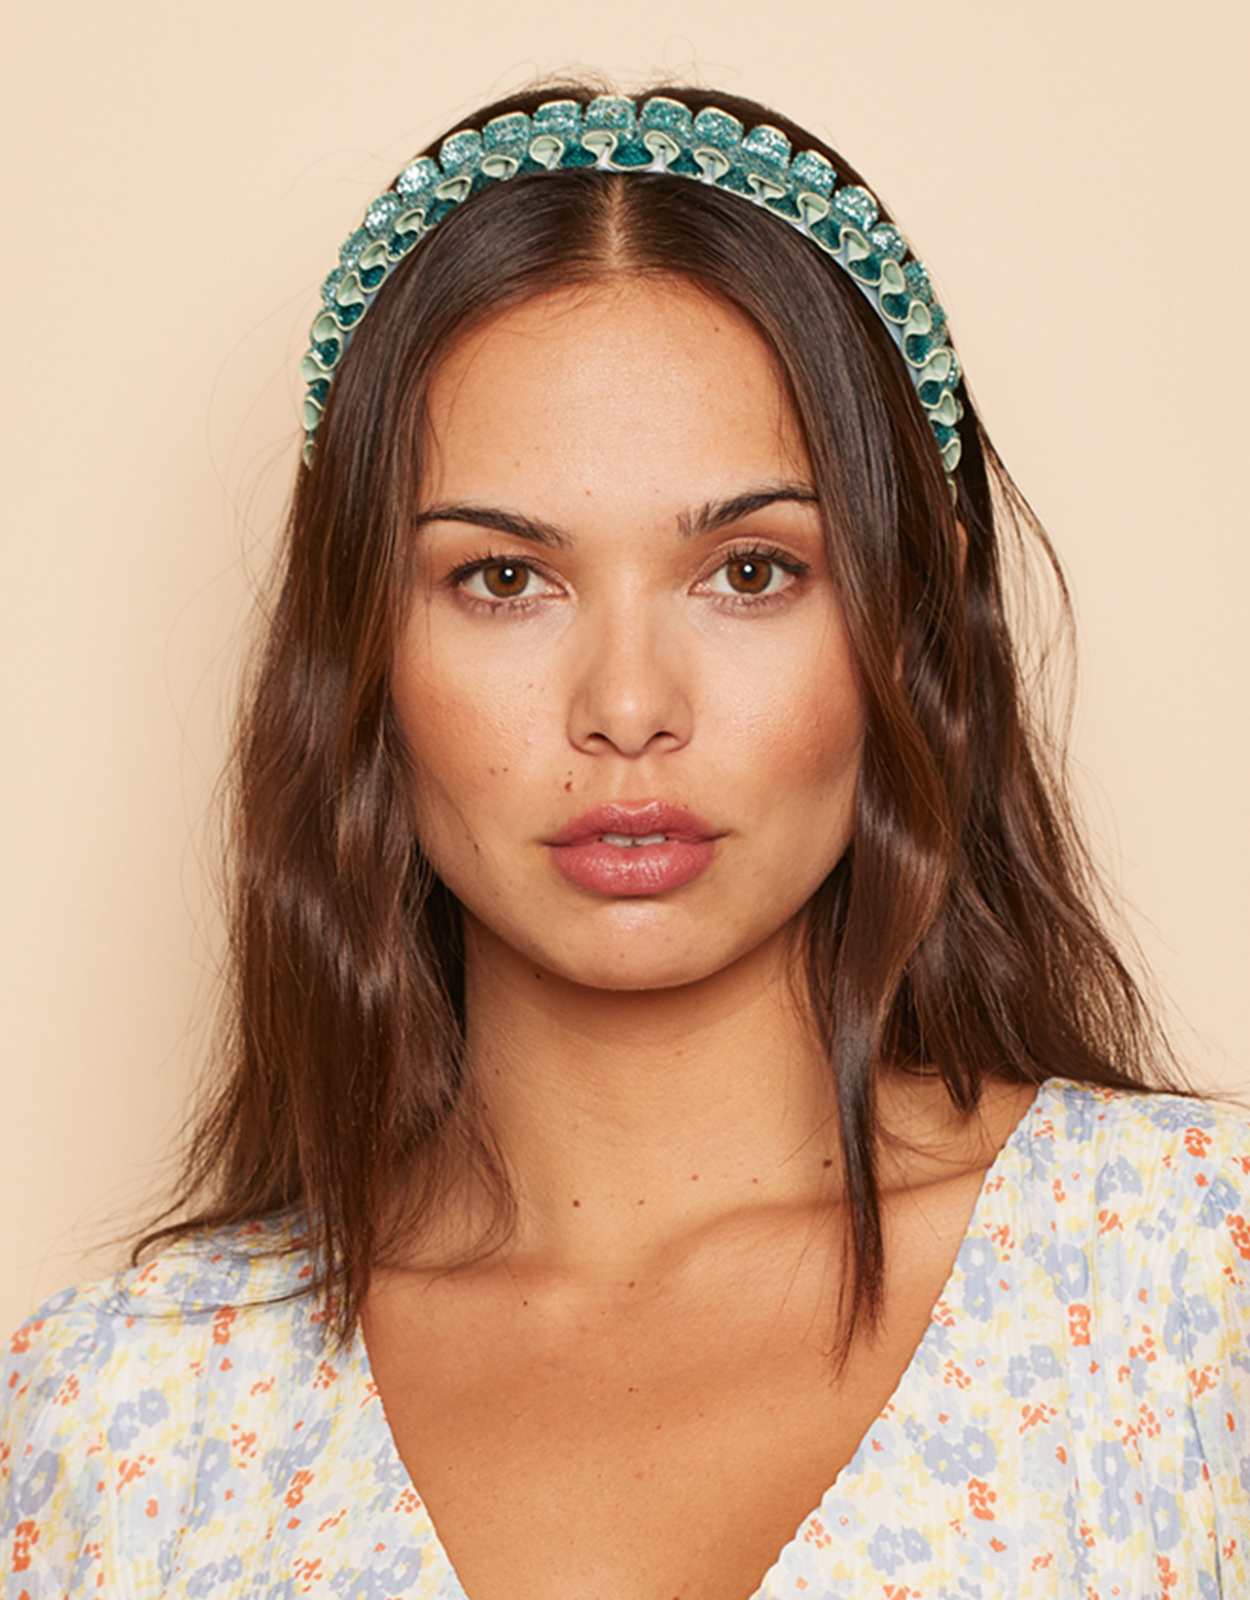 designer headbands for women gucci chanel